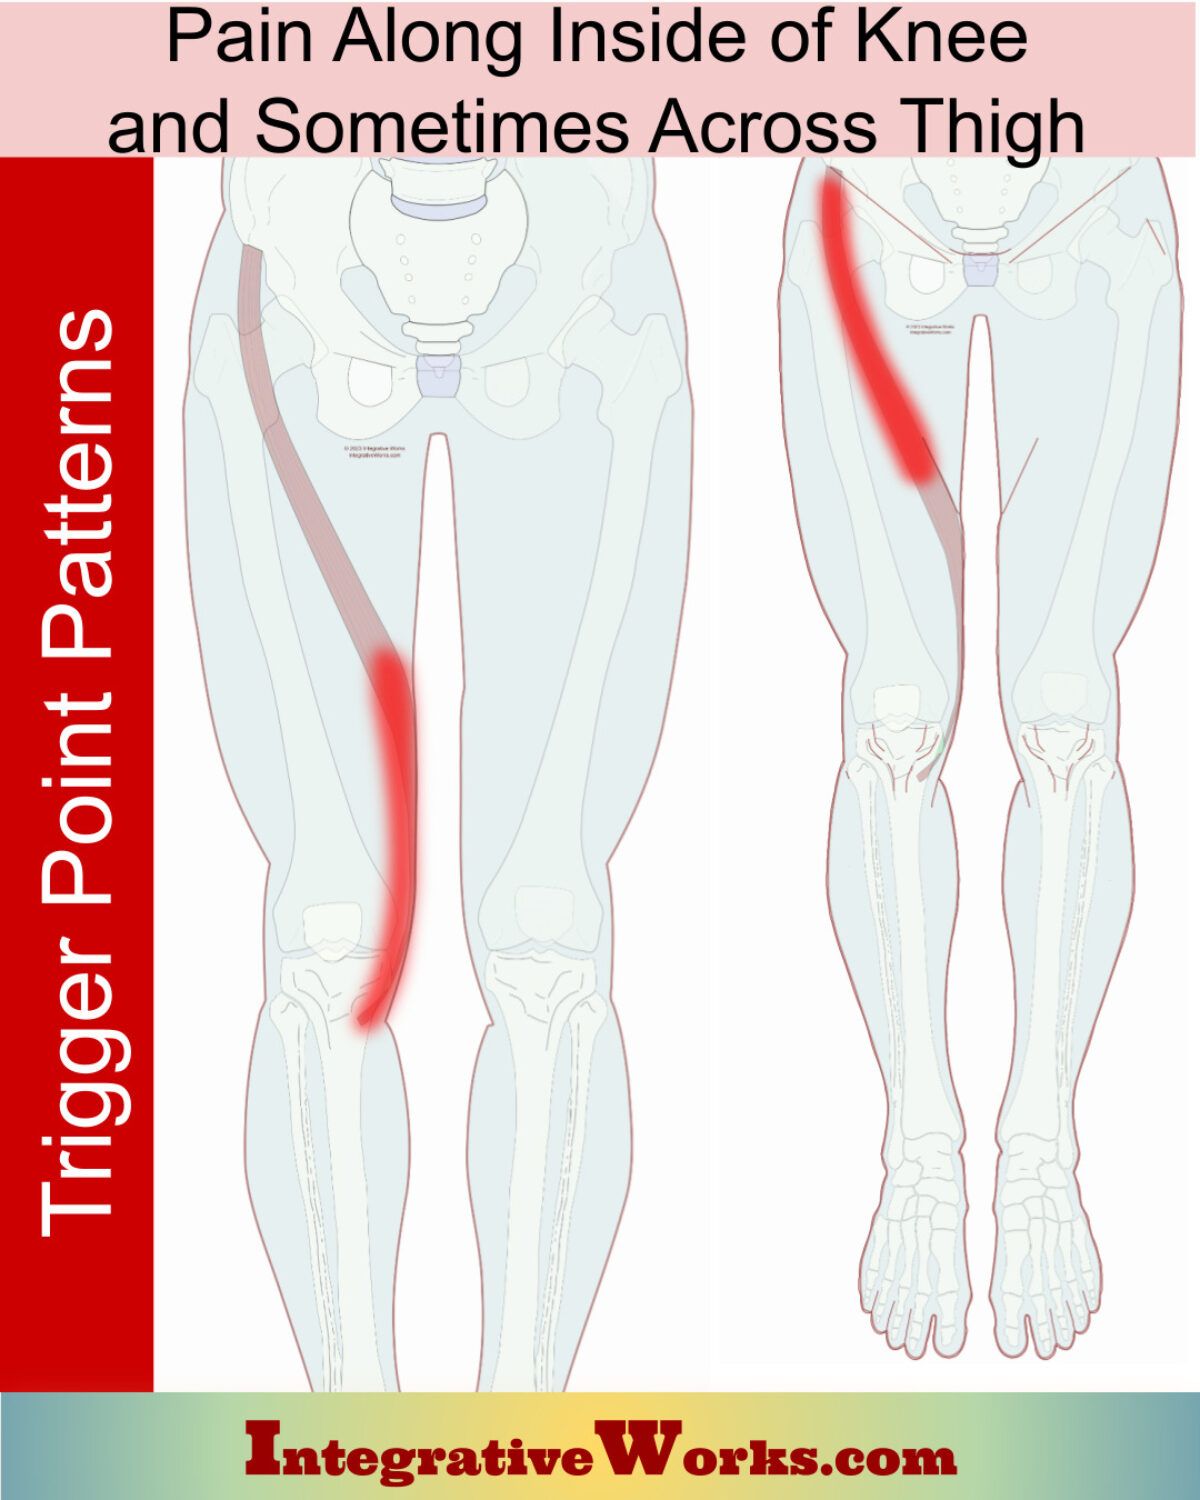 Pain Inside Knee. Sometimes Across Thigh - Integrative Works